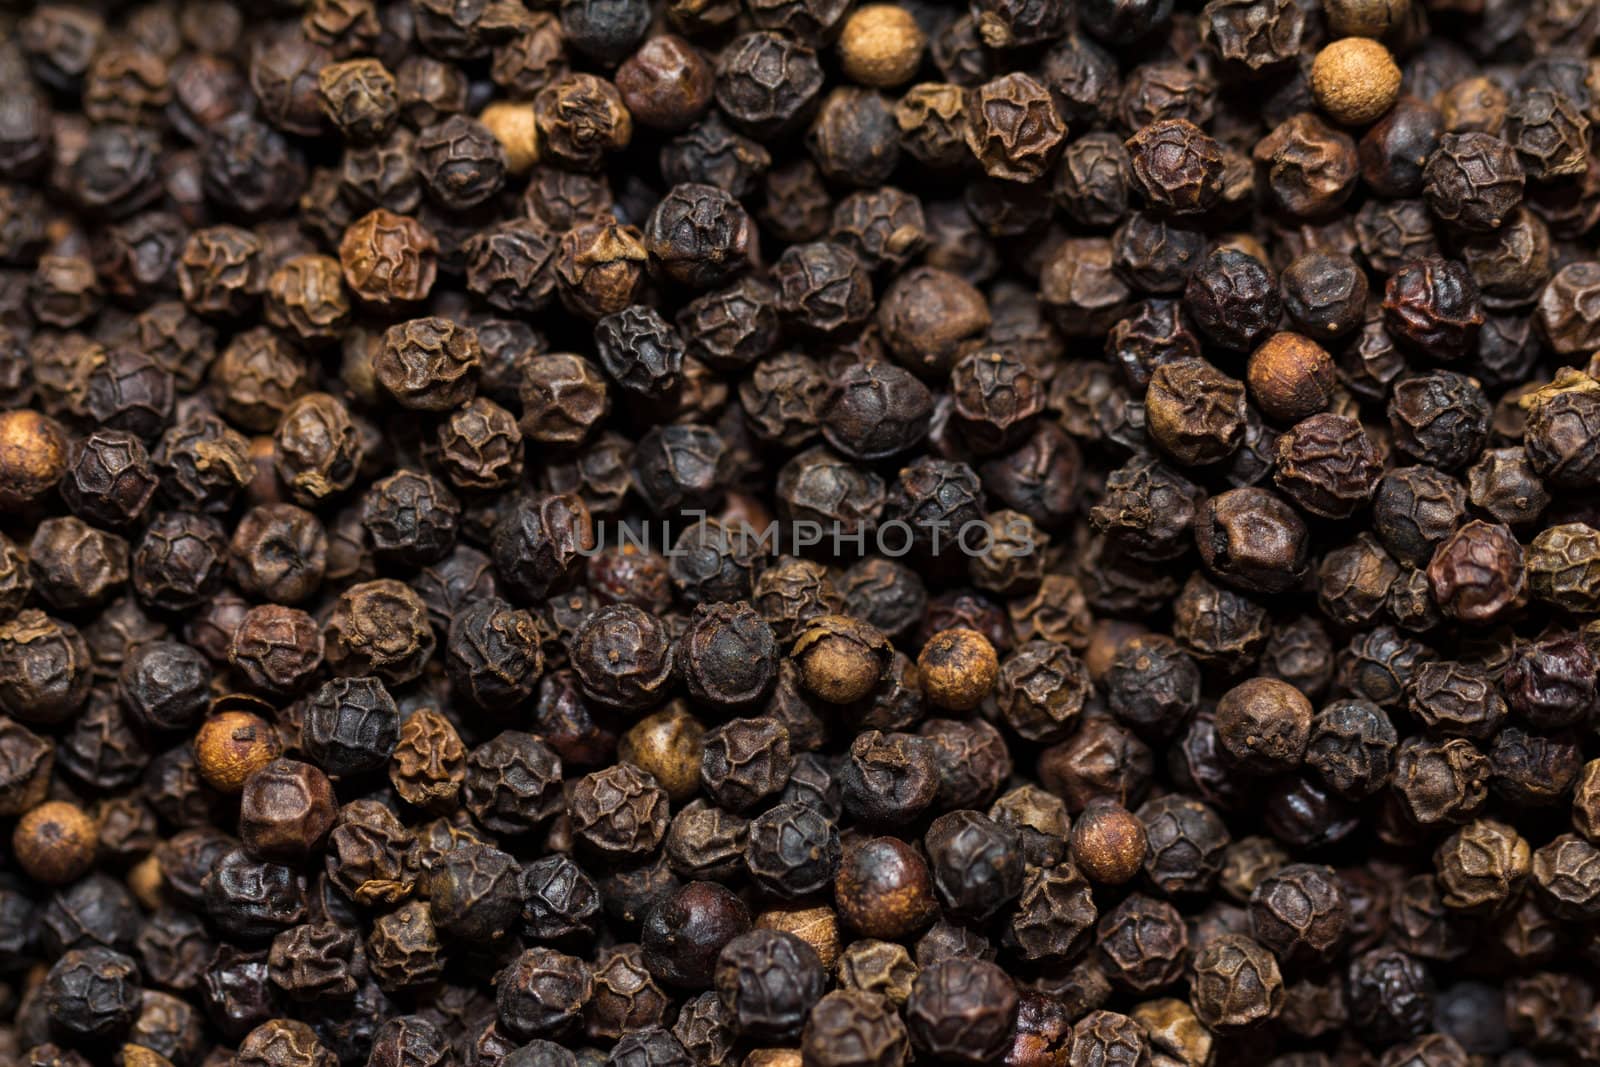 Black pepper Corns by Bernilynn